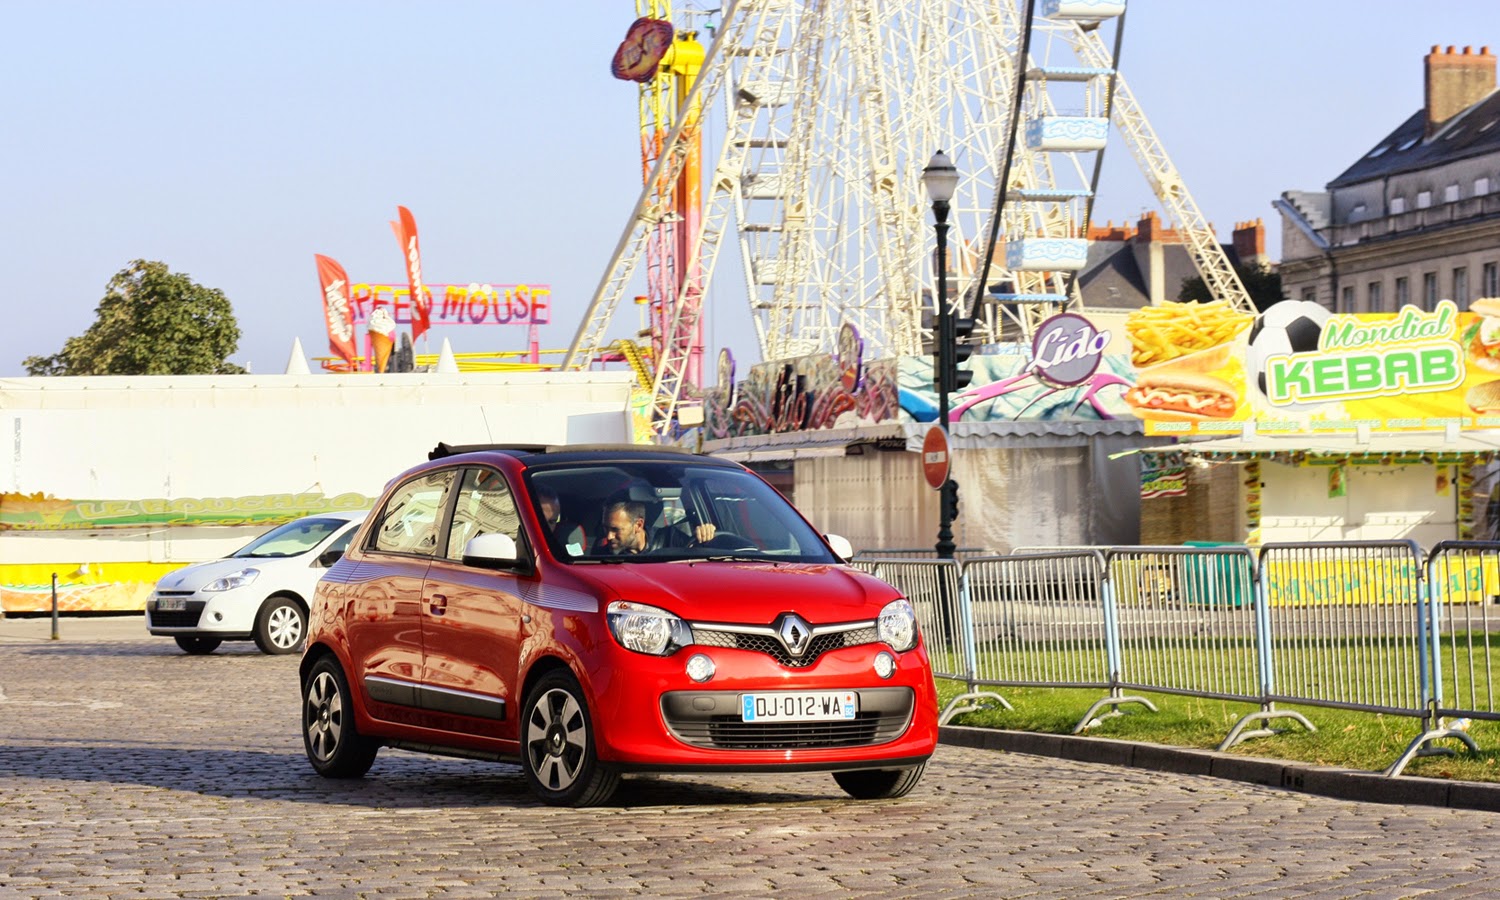 2014 Renault Twingo in Nantes, France | Photo © Raphael Gürth/autofilou.at